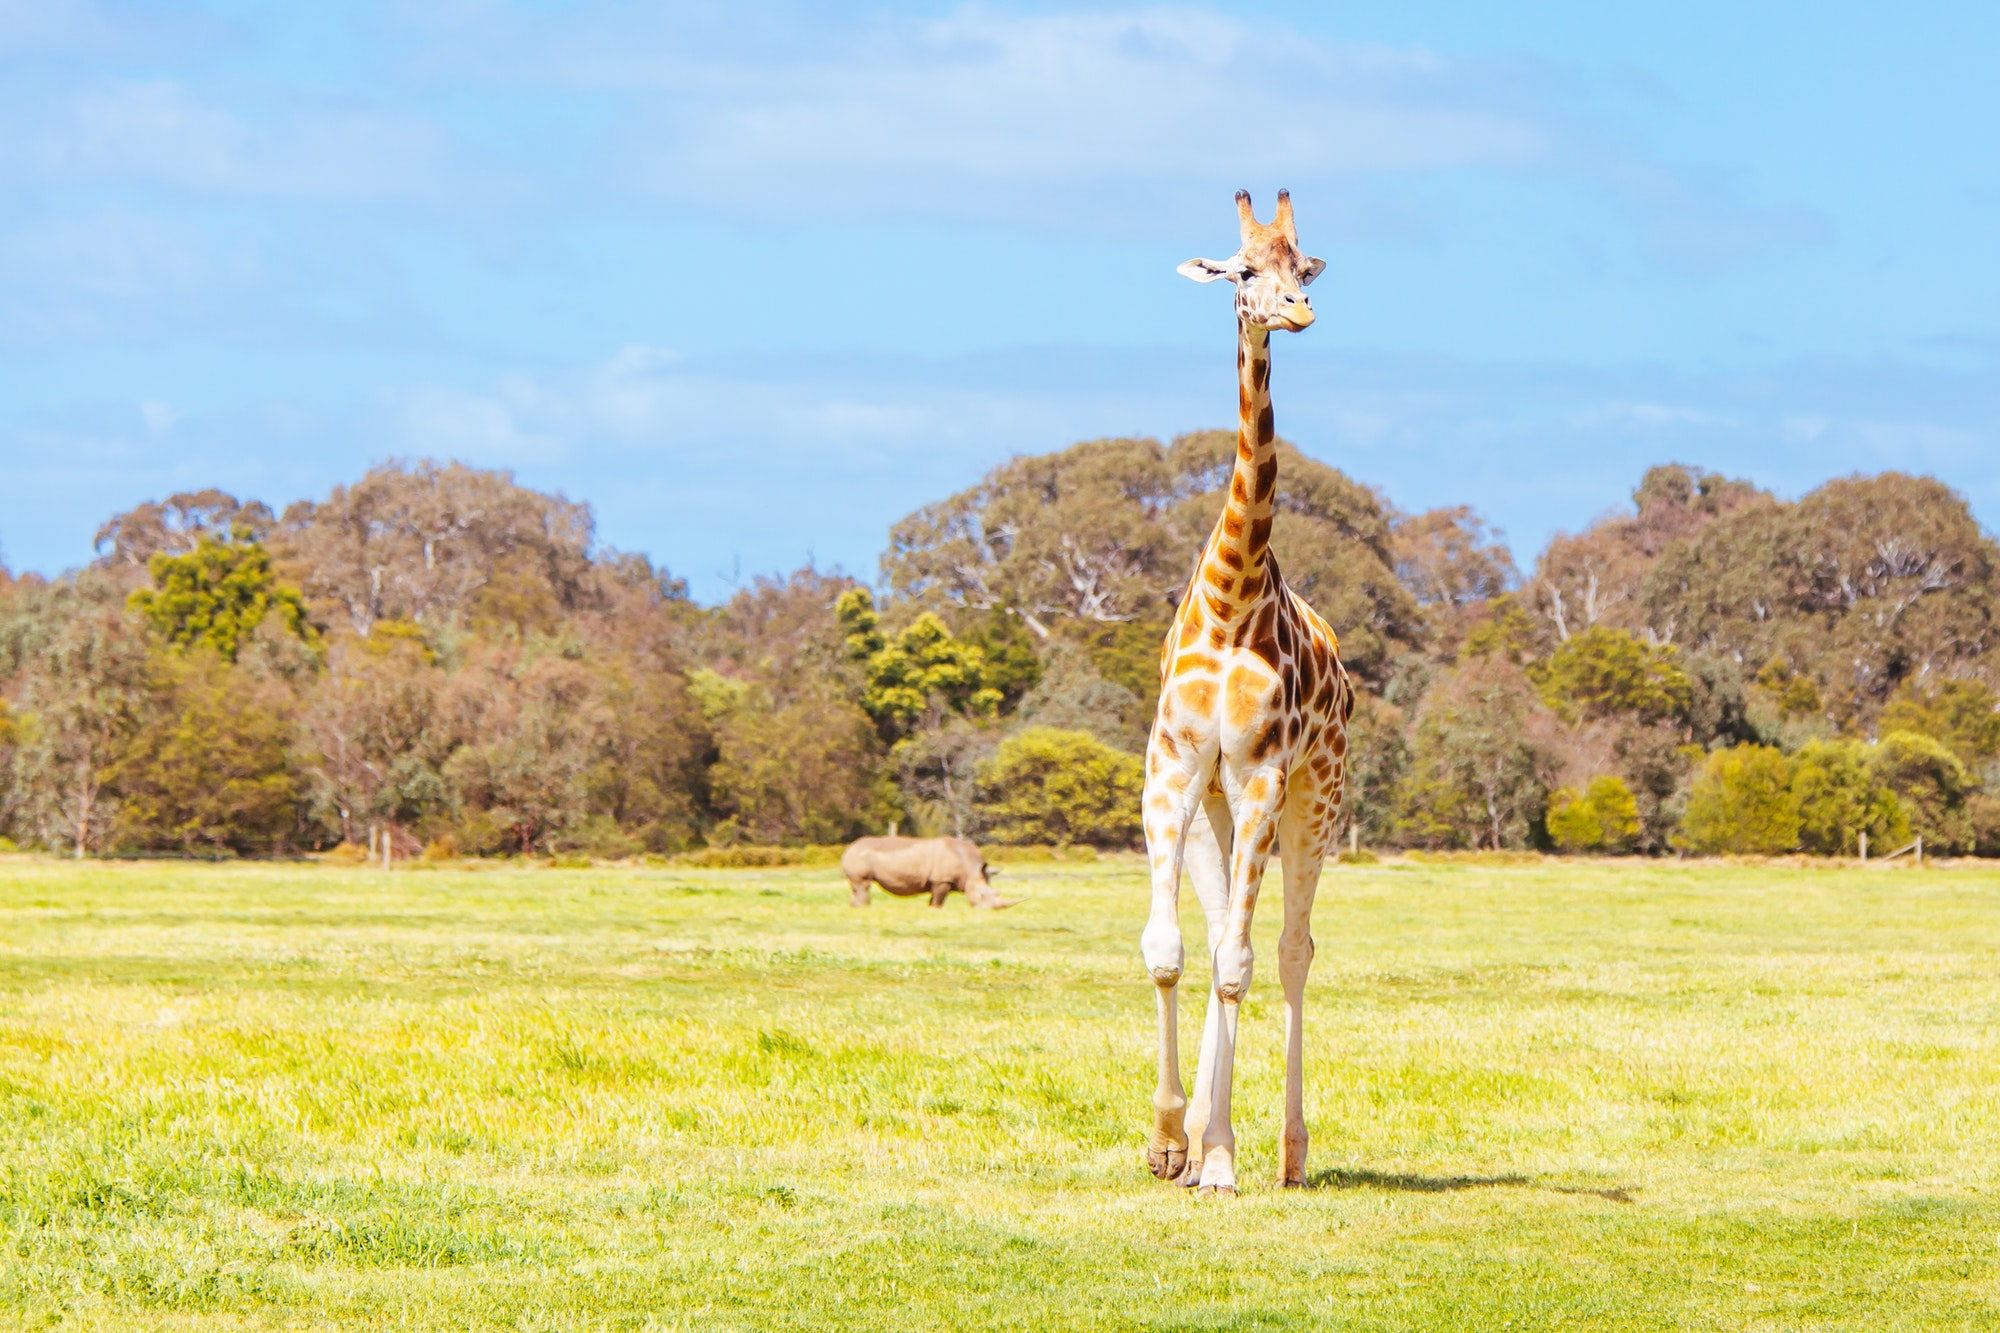 Giraffes in a Zoo in Australia